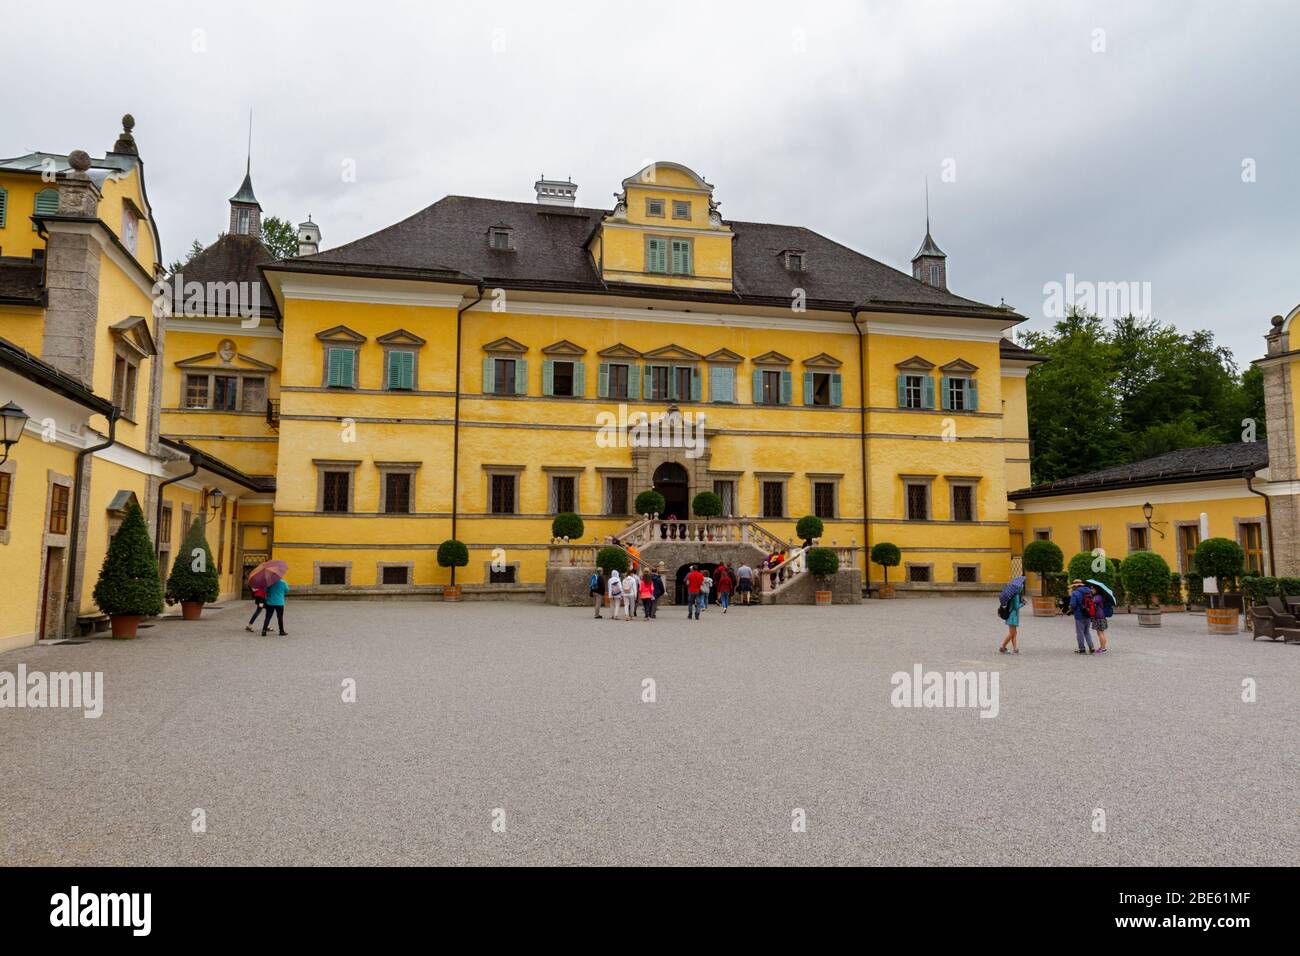 Le Palais, Schloss Hellbrunn, Salzbourg, Autriche. Banque D'Images